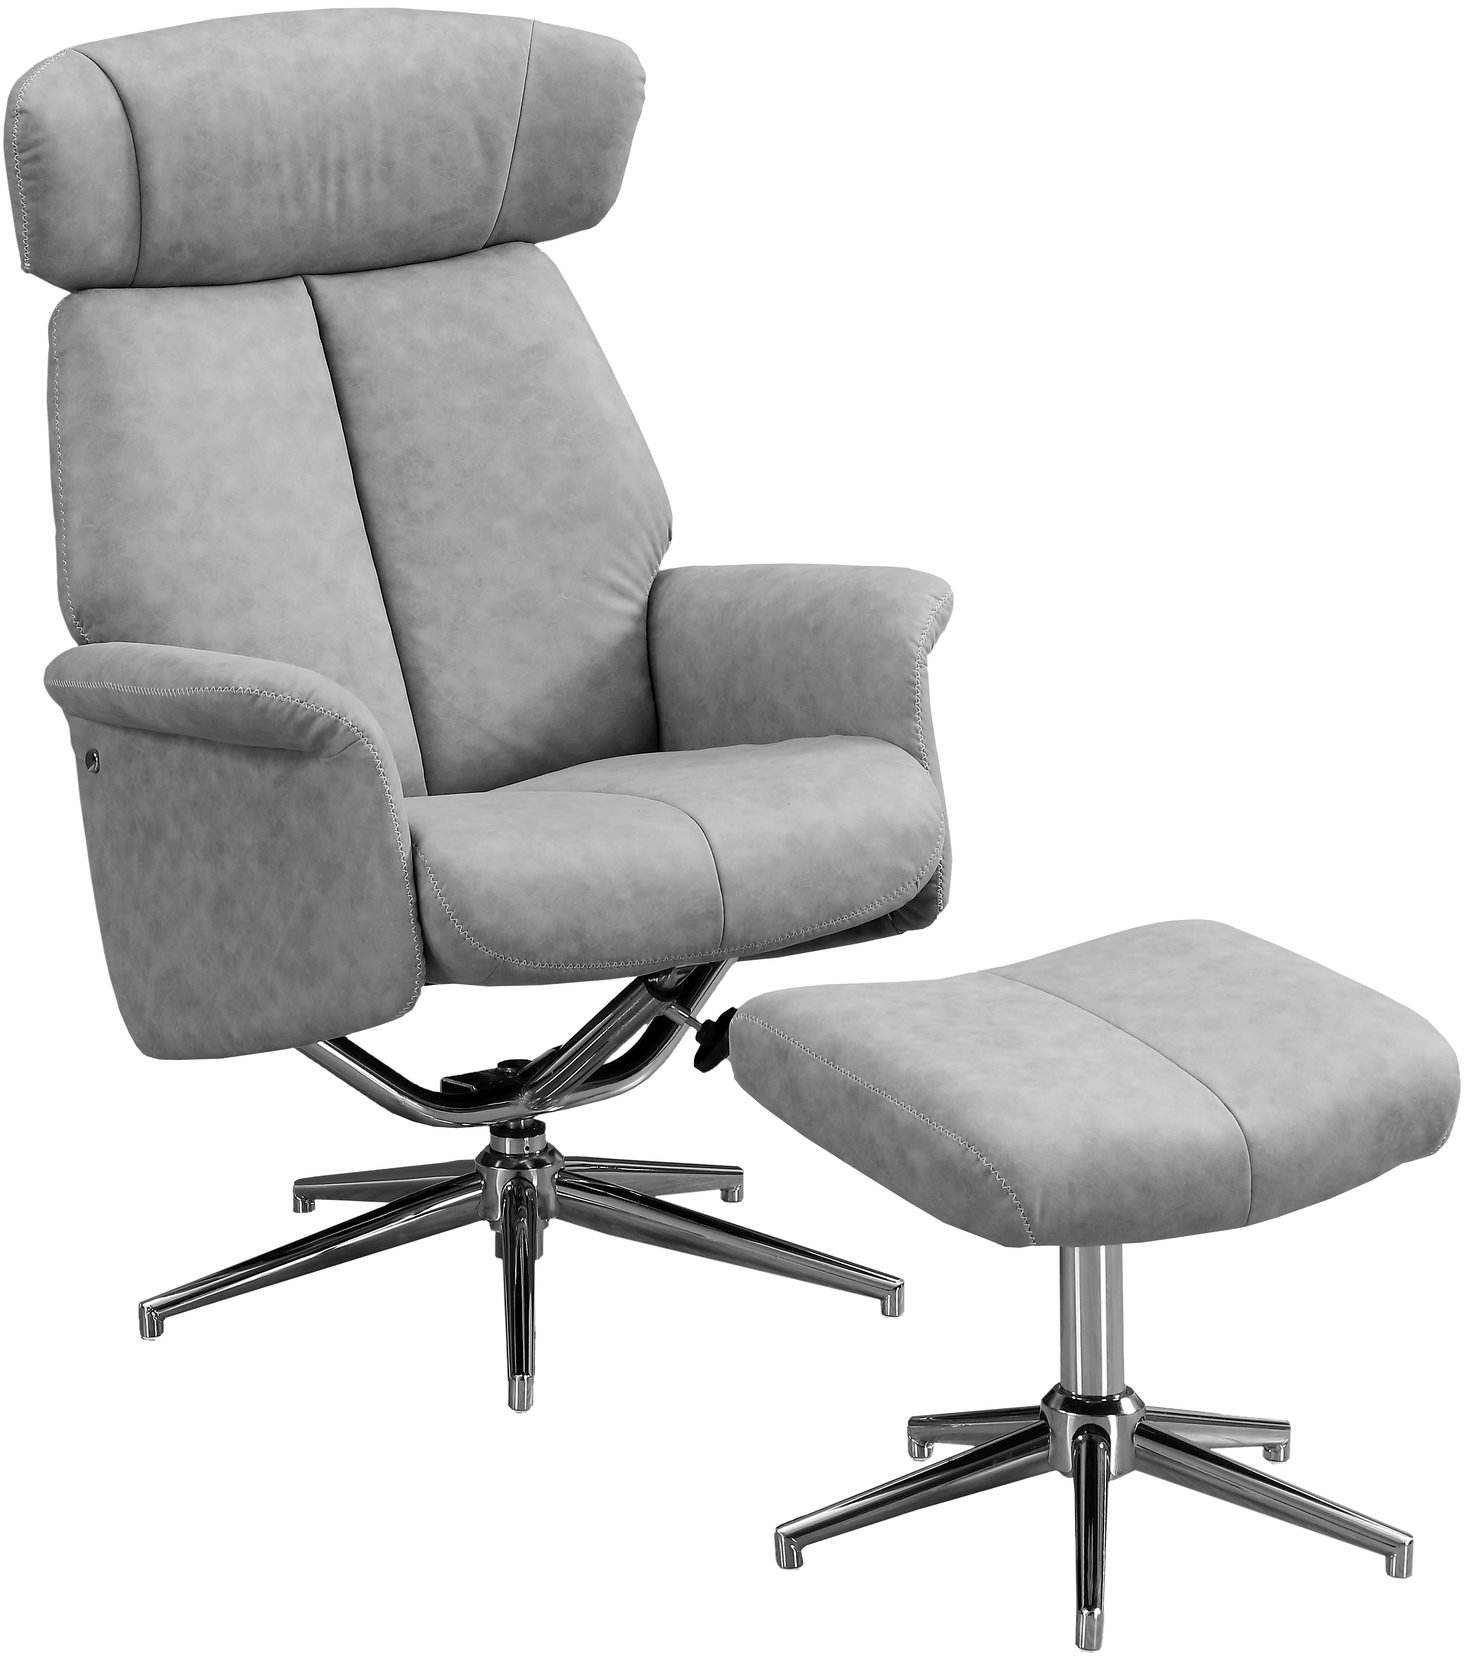 Monarch Specialties Inc. 2 Piece Grey Swivel Adjust Headrest Reclining Chair